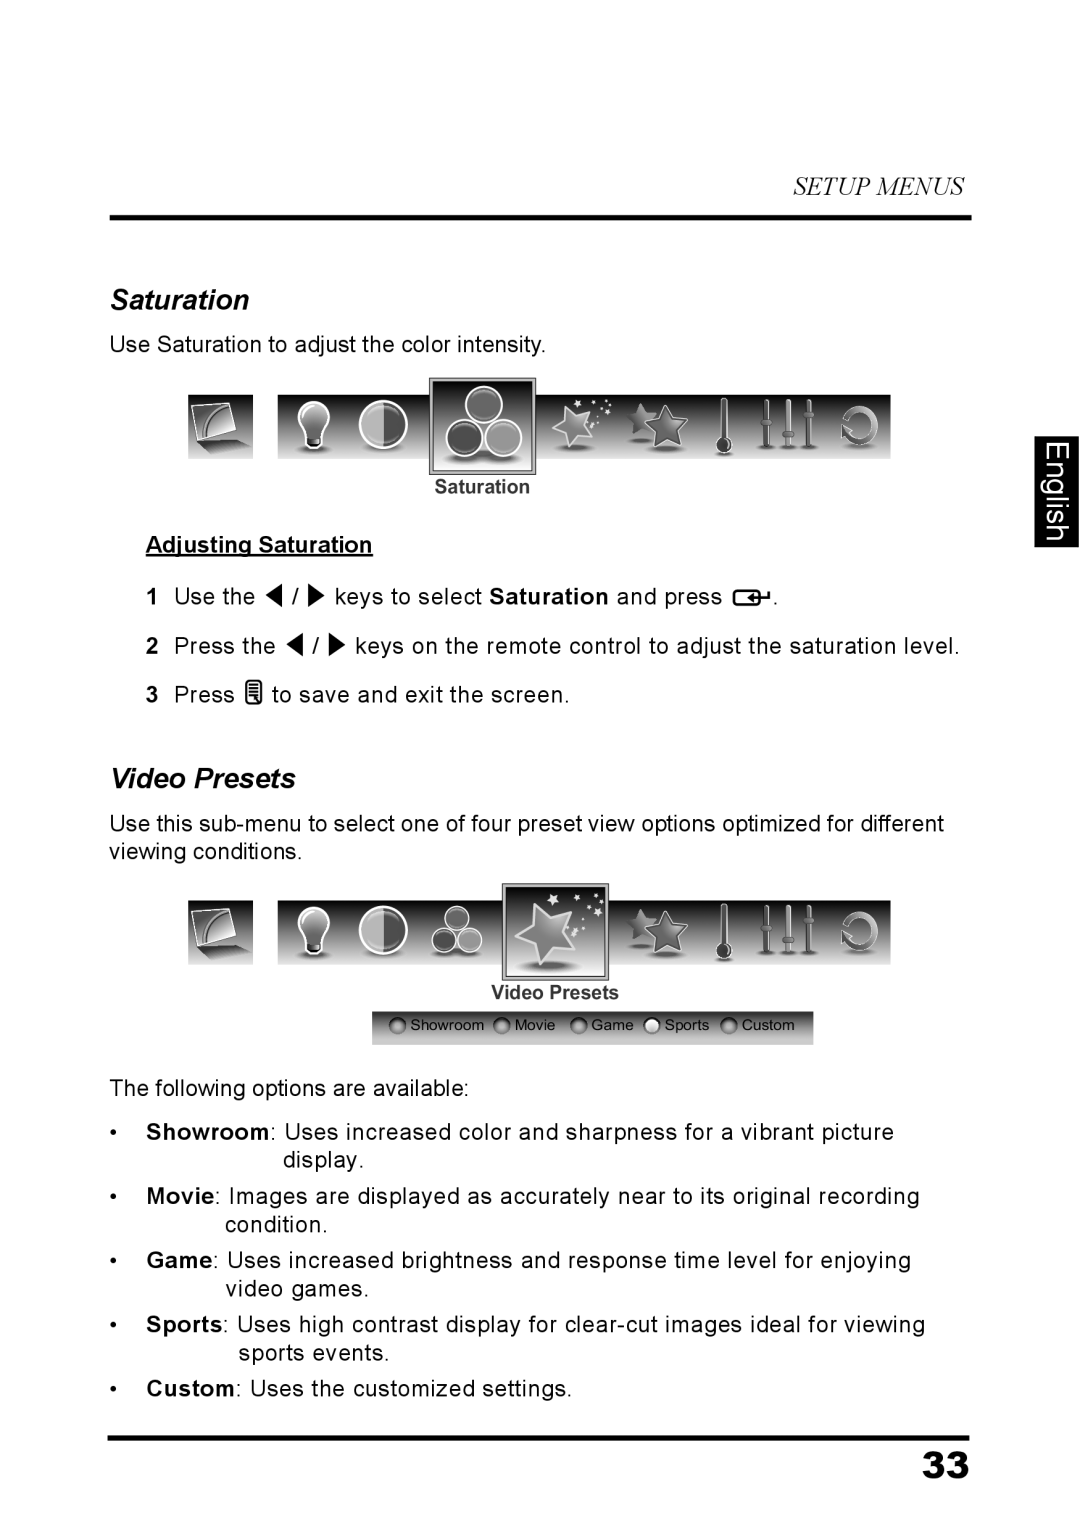 Westinghouse LD-3237 user manual Video Presets, English, Setup Menus, Adjusting Saturation 